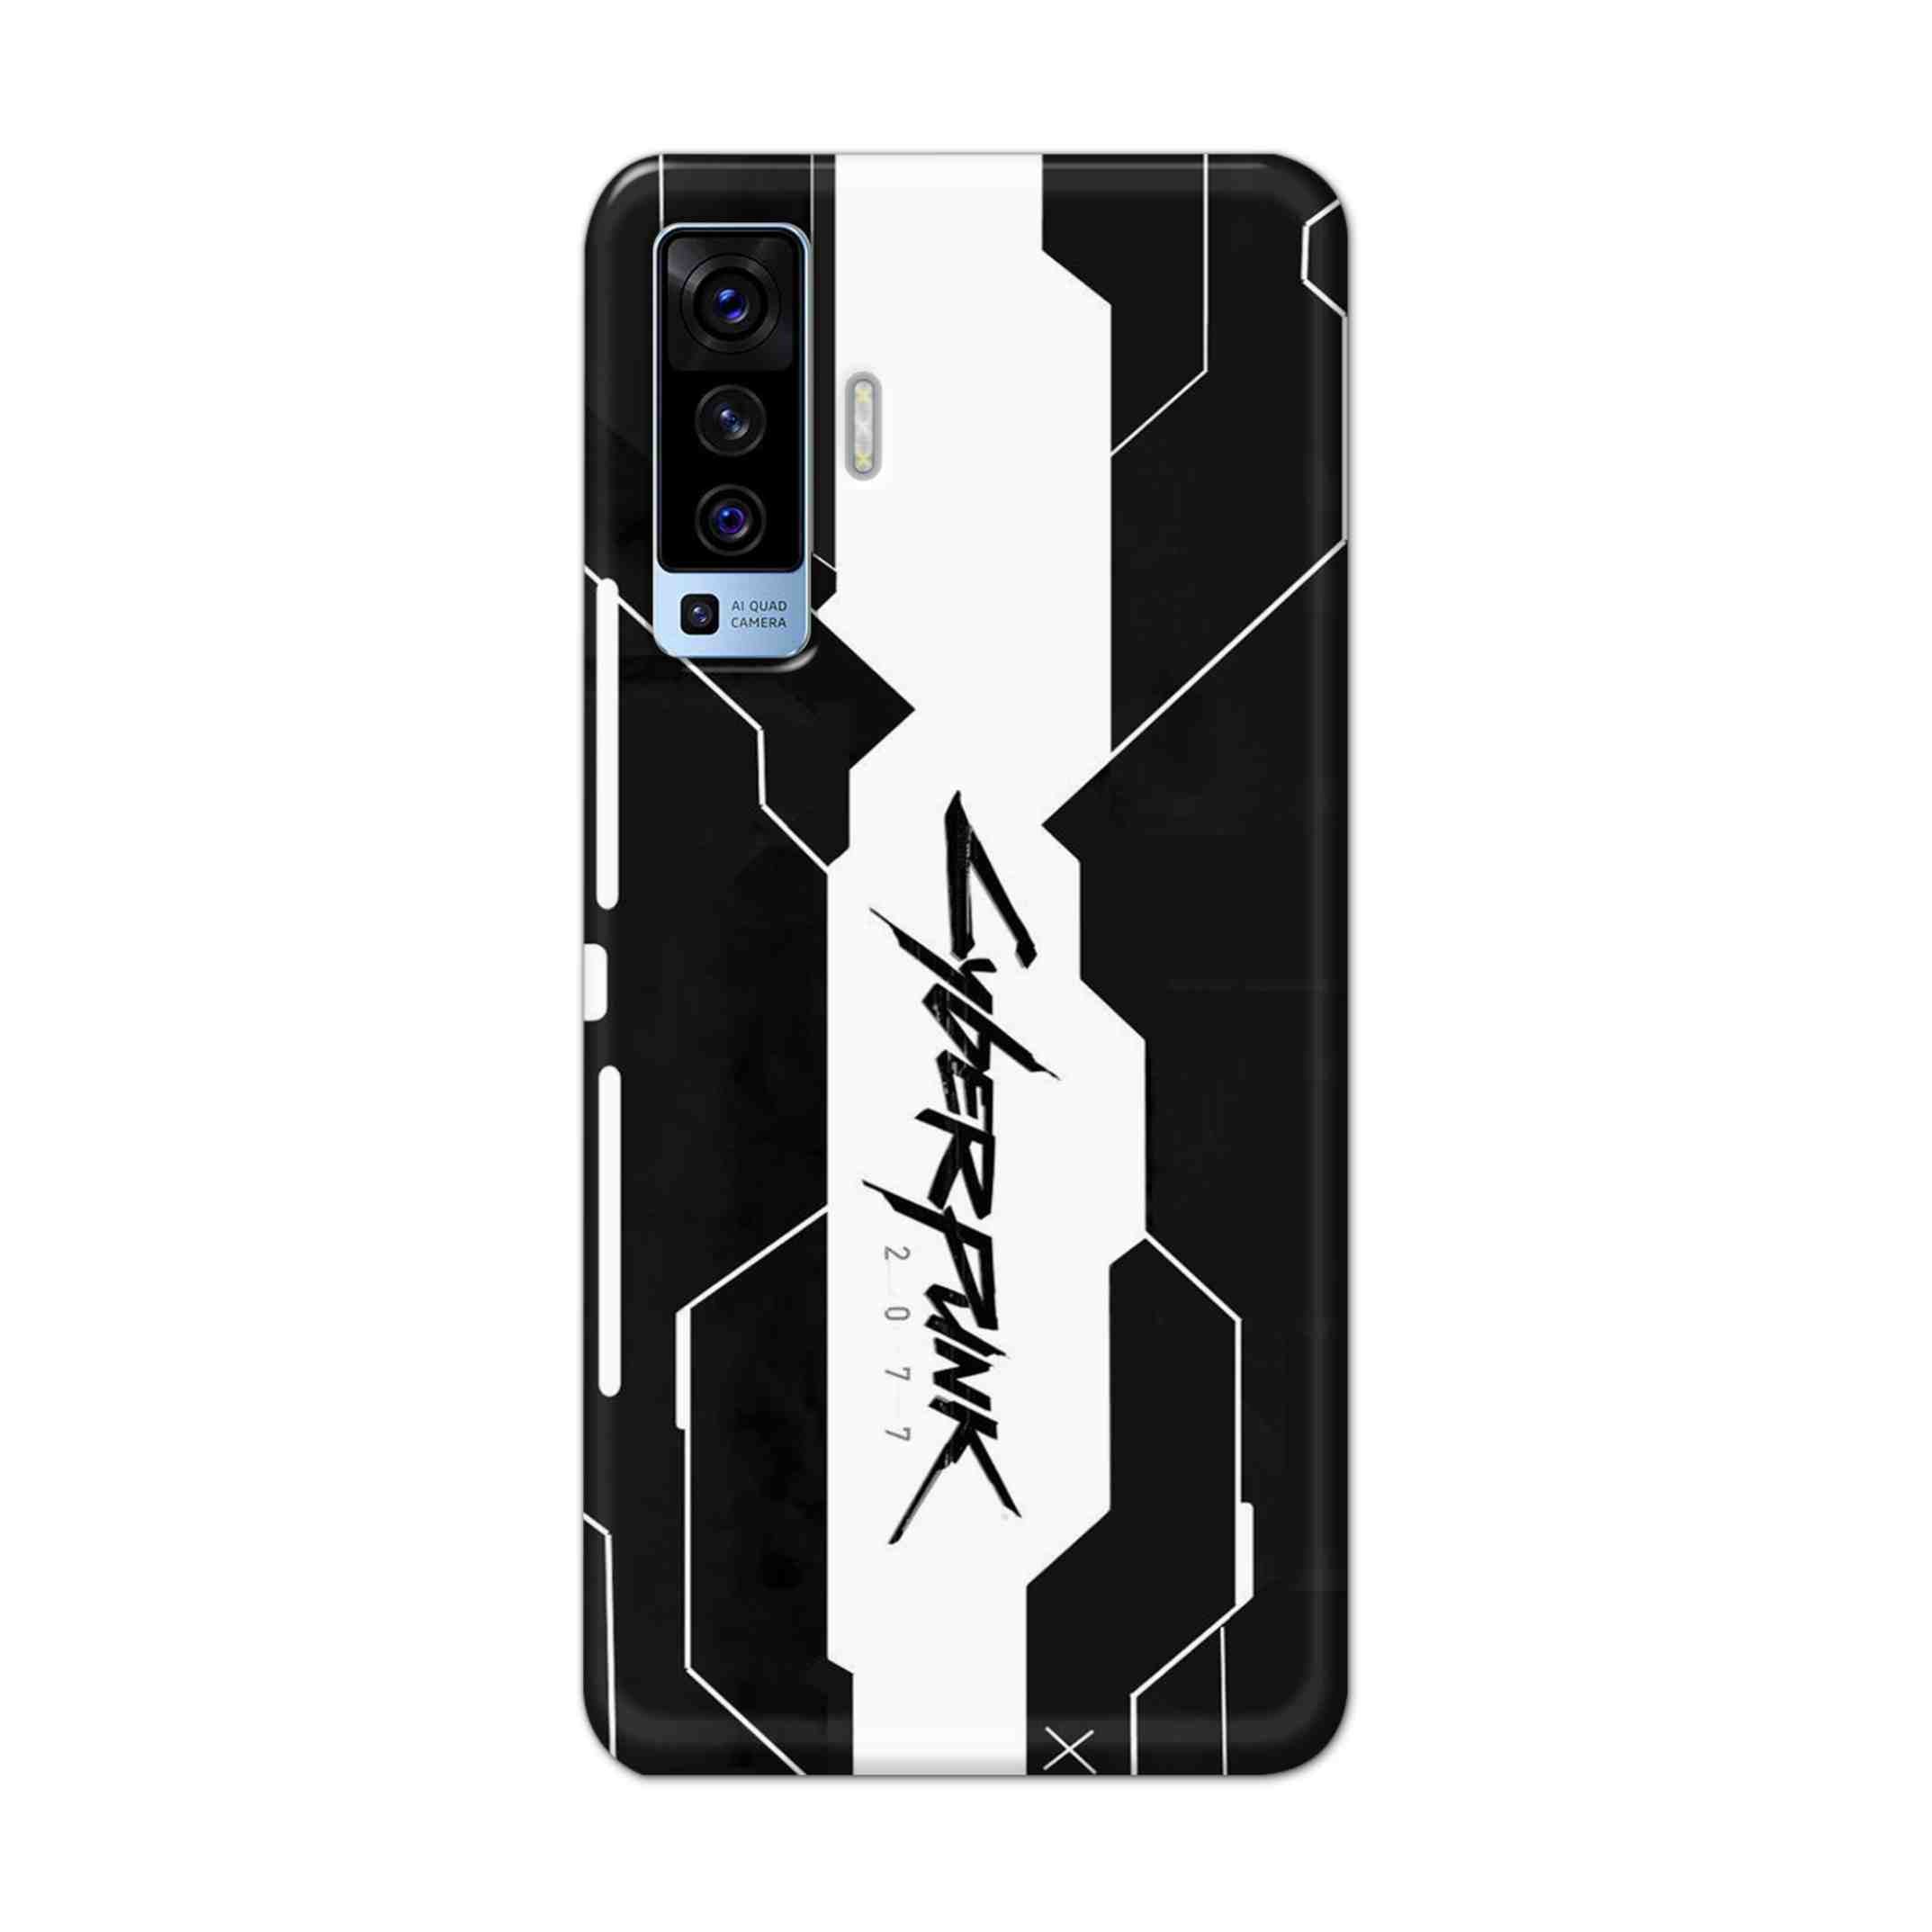 Buy Cyberpunk 2077 Art Hard Back Mobile Phone Case Cover For Vivo X50 Online